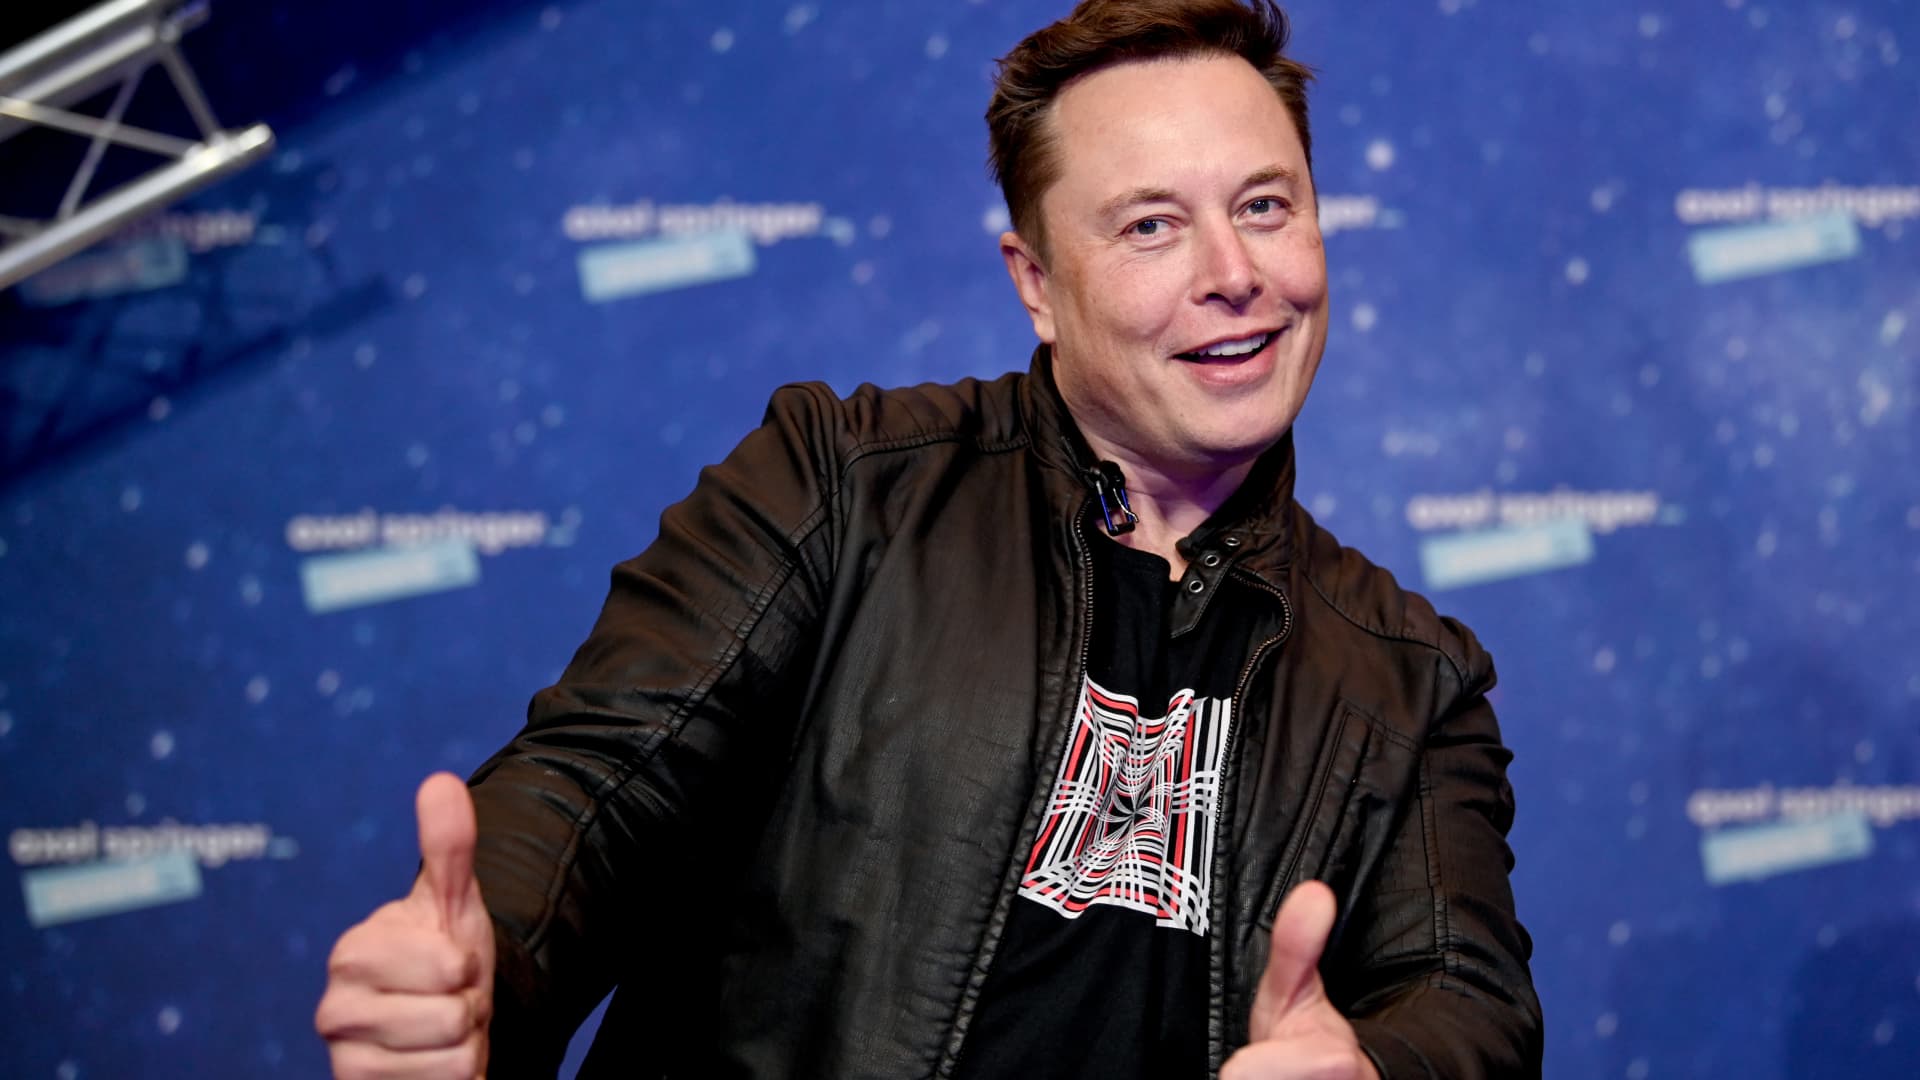 Elon Musk’s Twitter bid faces major skepticism on Wall Street – CNBC